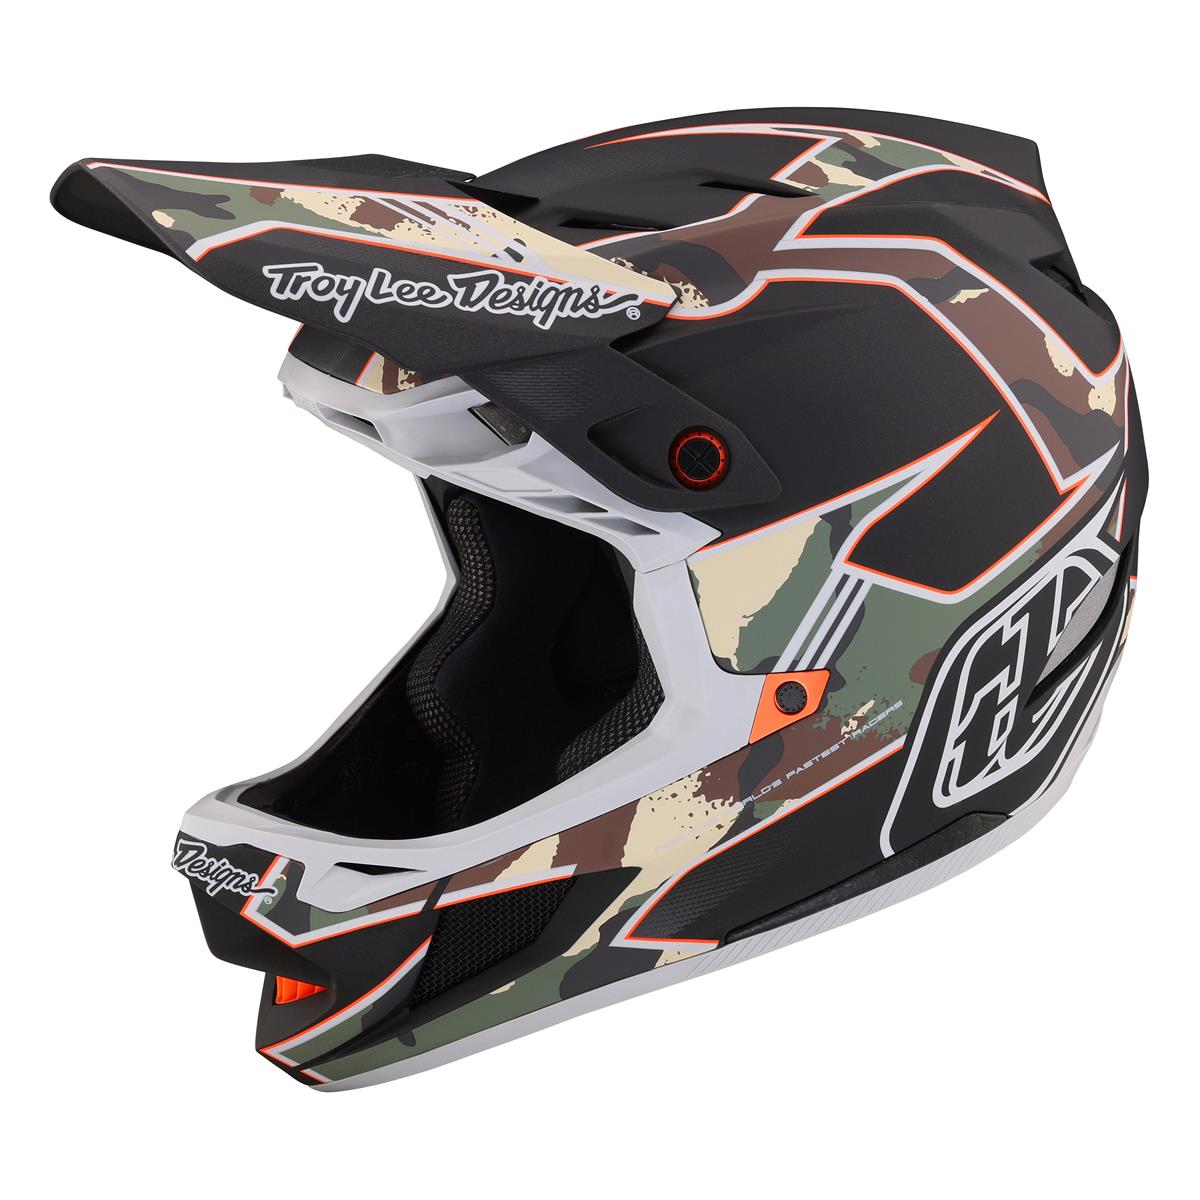 Troy Lee Designs Downhill MTB Helmet D4 Composite MIPS Matrix - Camo Army Green